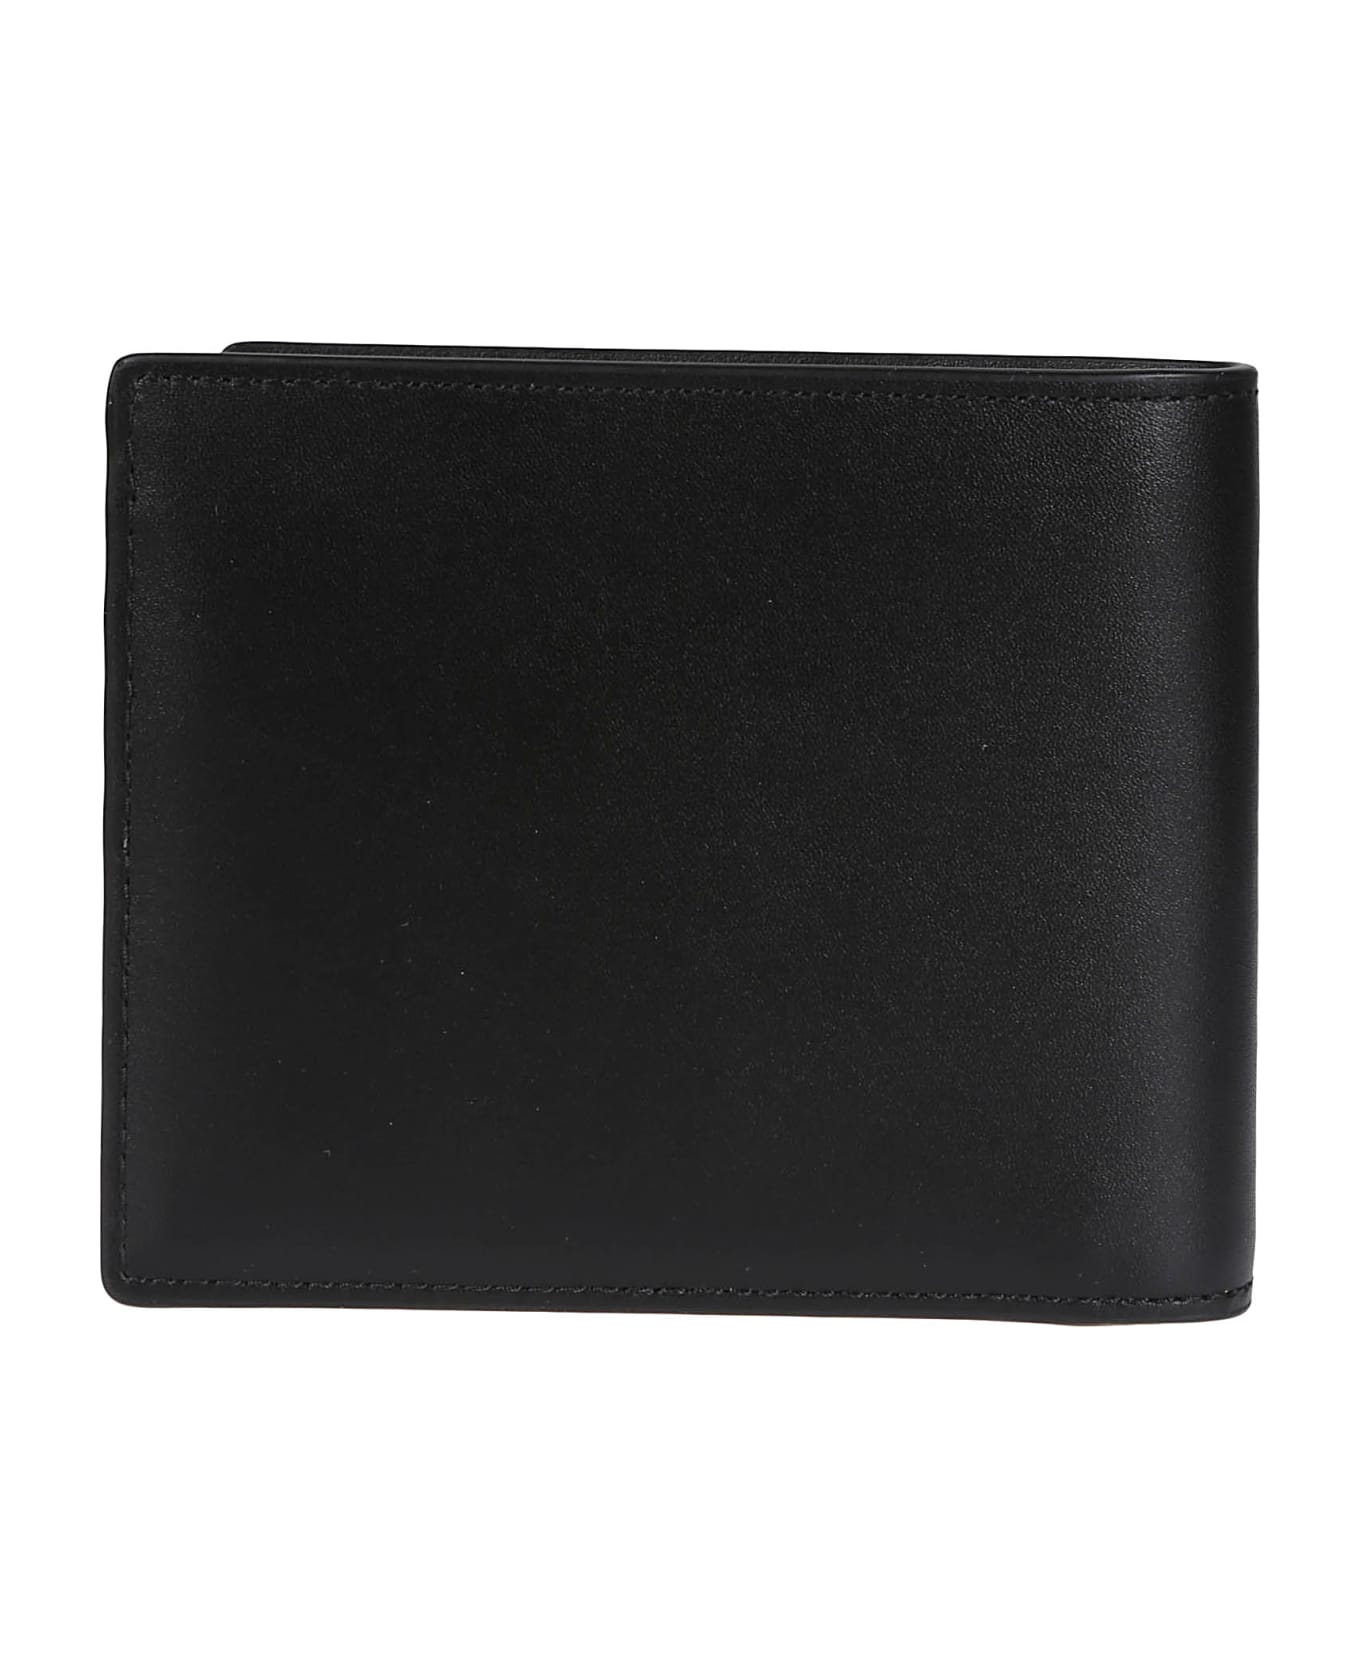 Kenzo Wallet With Logo - Noir